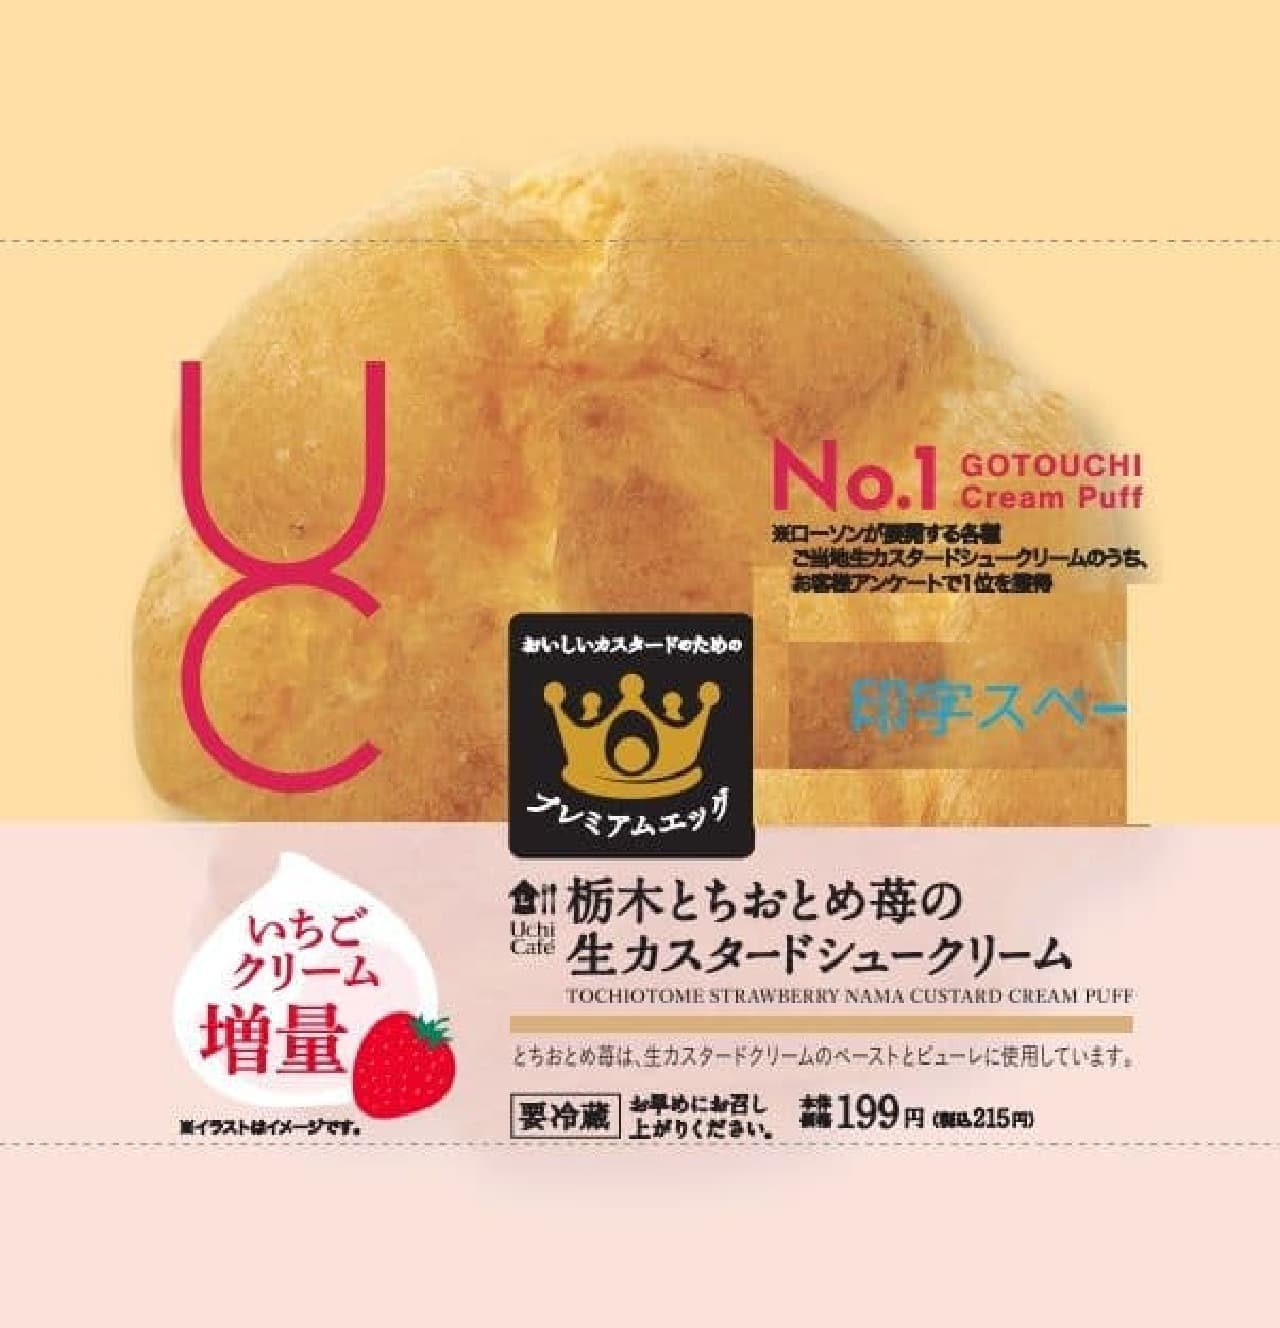 Lawson "Tochigi Tochiotome Strawberry Fresh Custard Cream Puff".